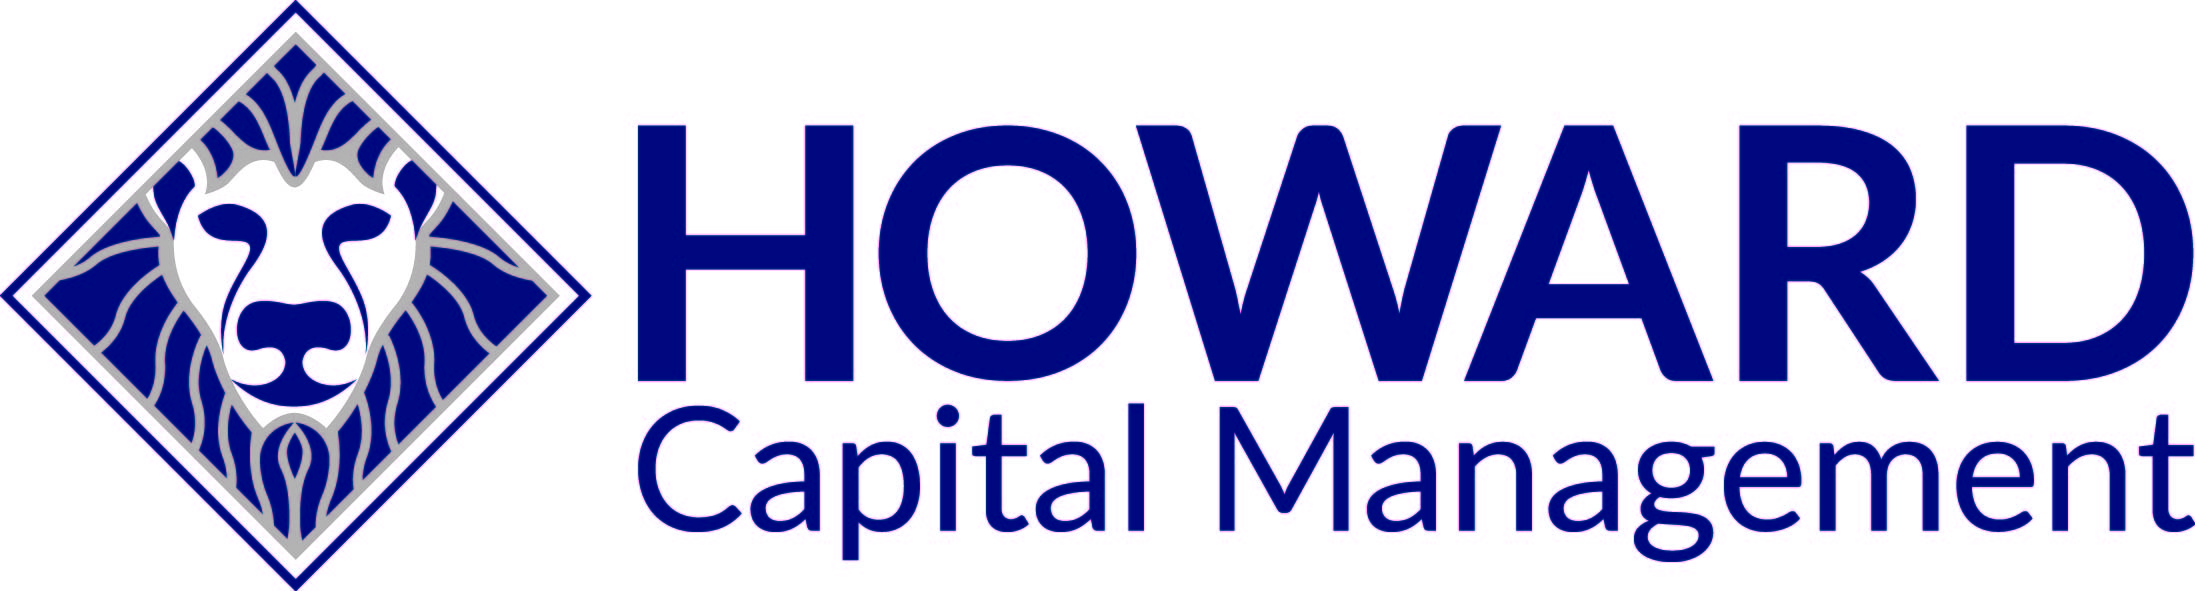 Howard Capital Management logo